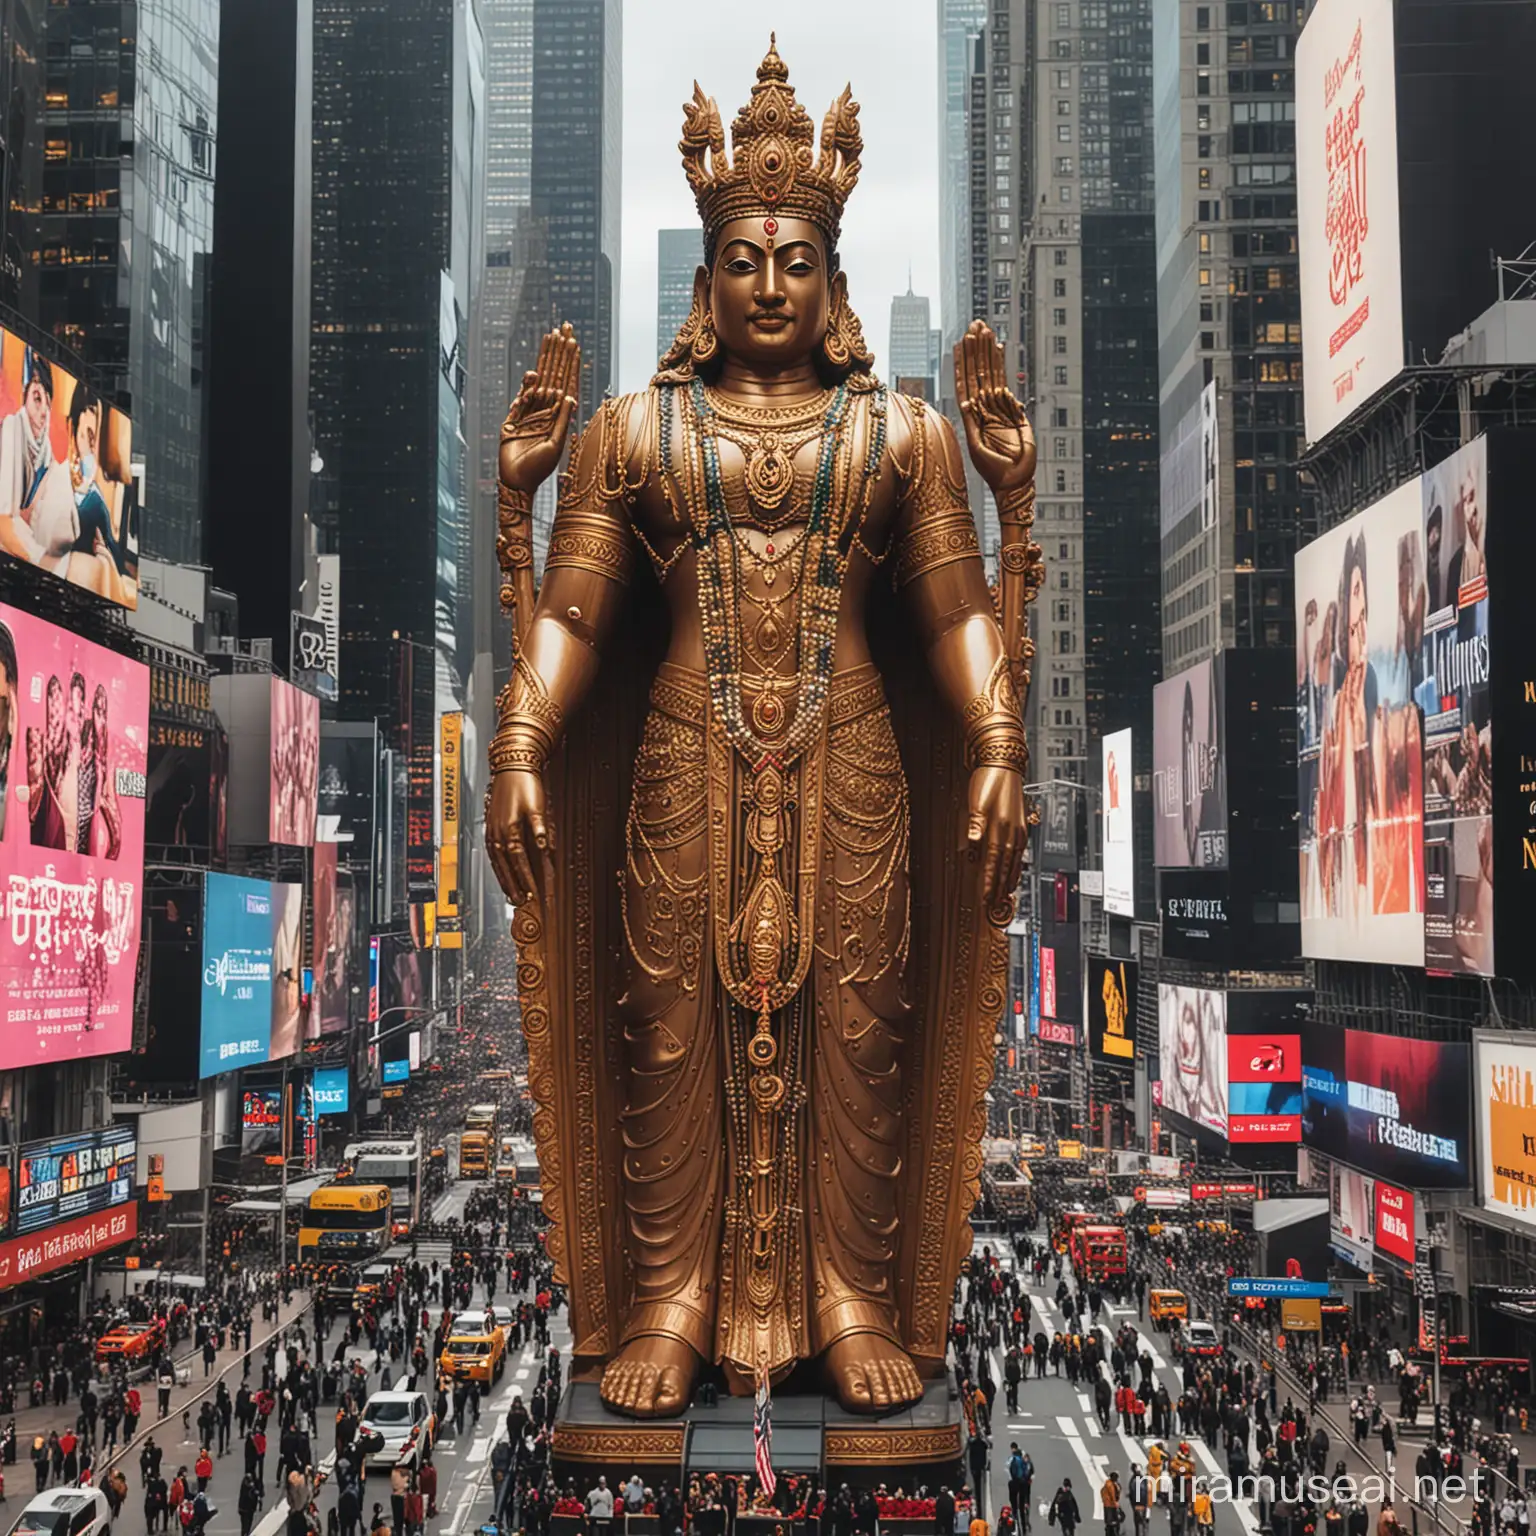 Lord venkelateswara gigantic statue in New York times square 